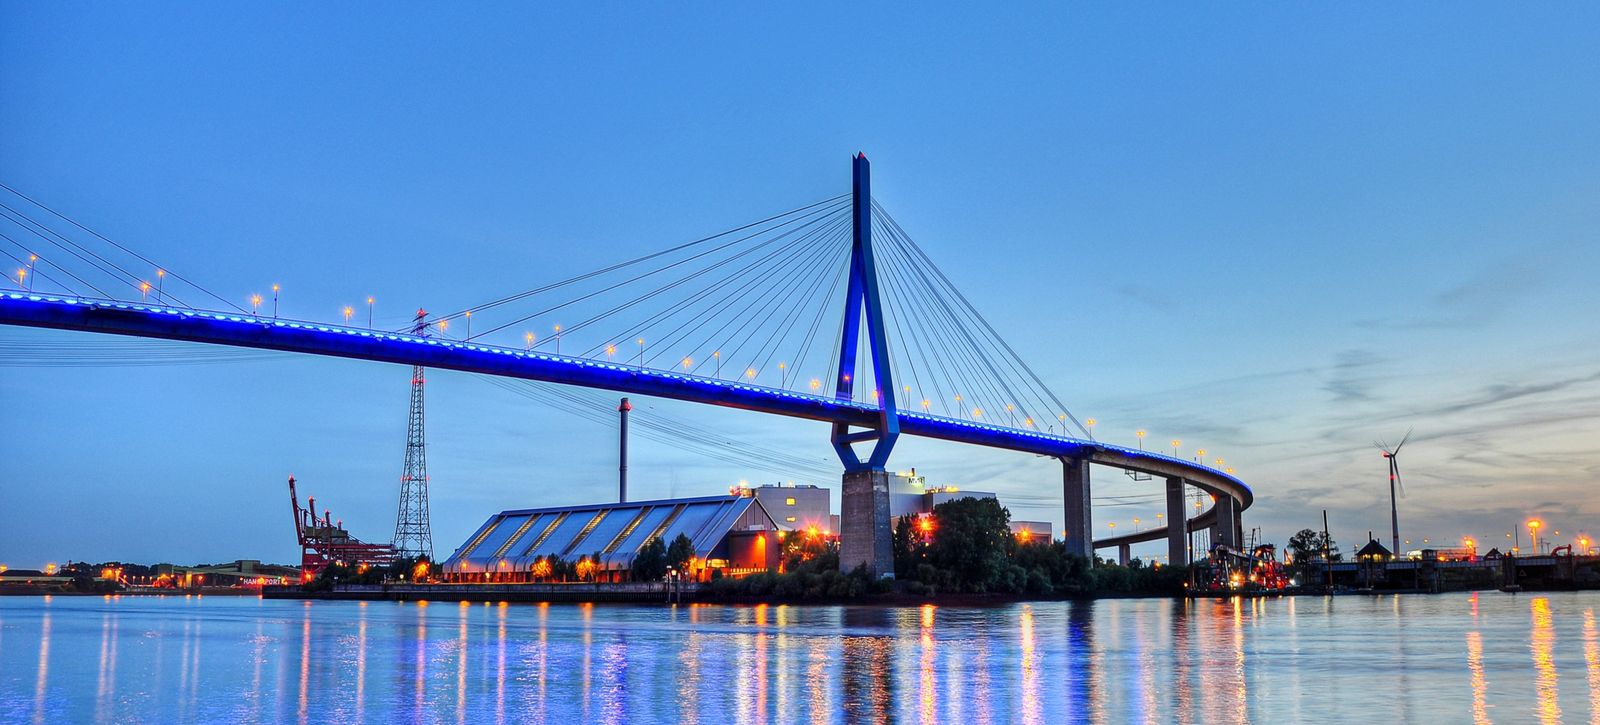 Köhlbrandbrücke über der Elbe mit Beleuchtung